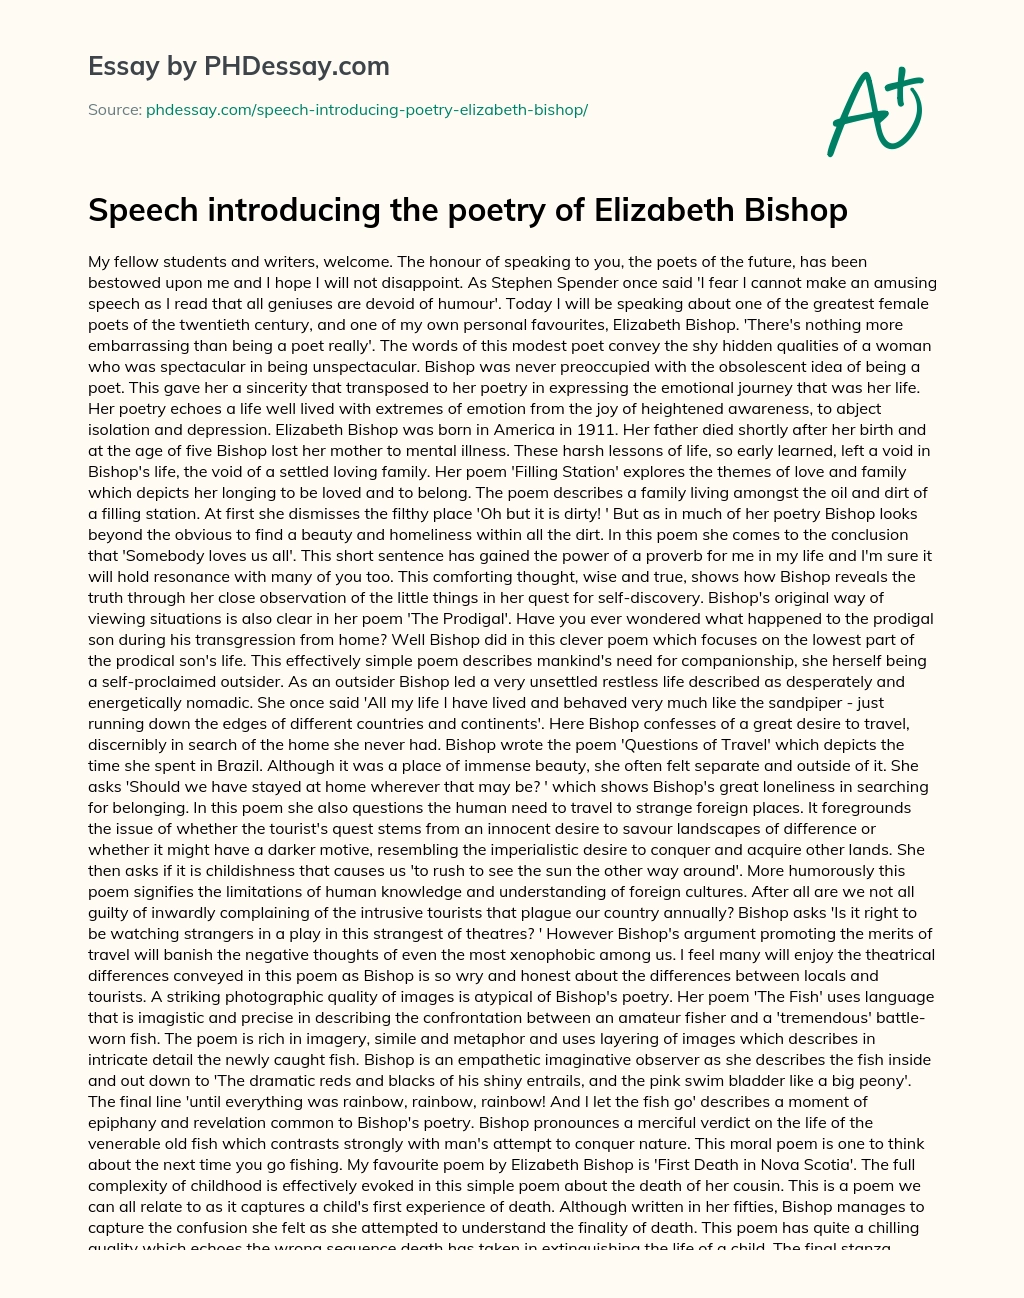 Speech introducing the poetry of Elizabeth Bishop essay